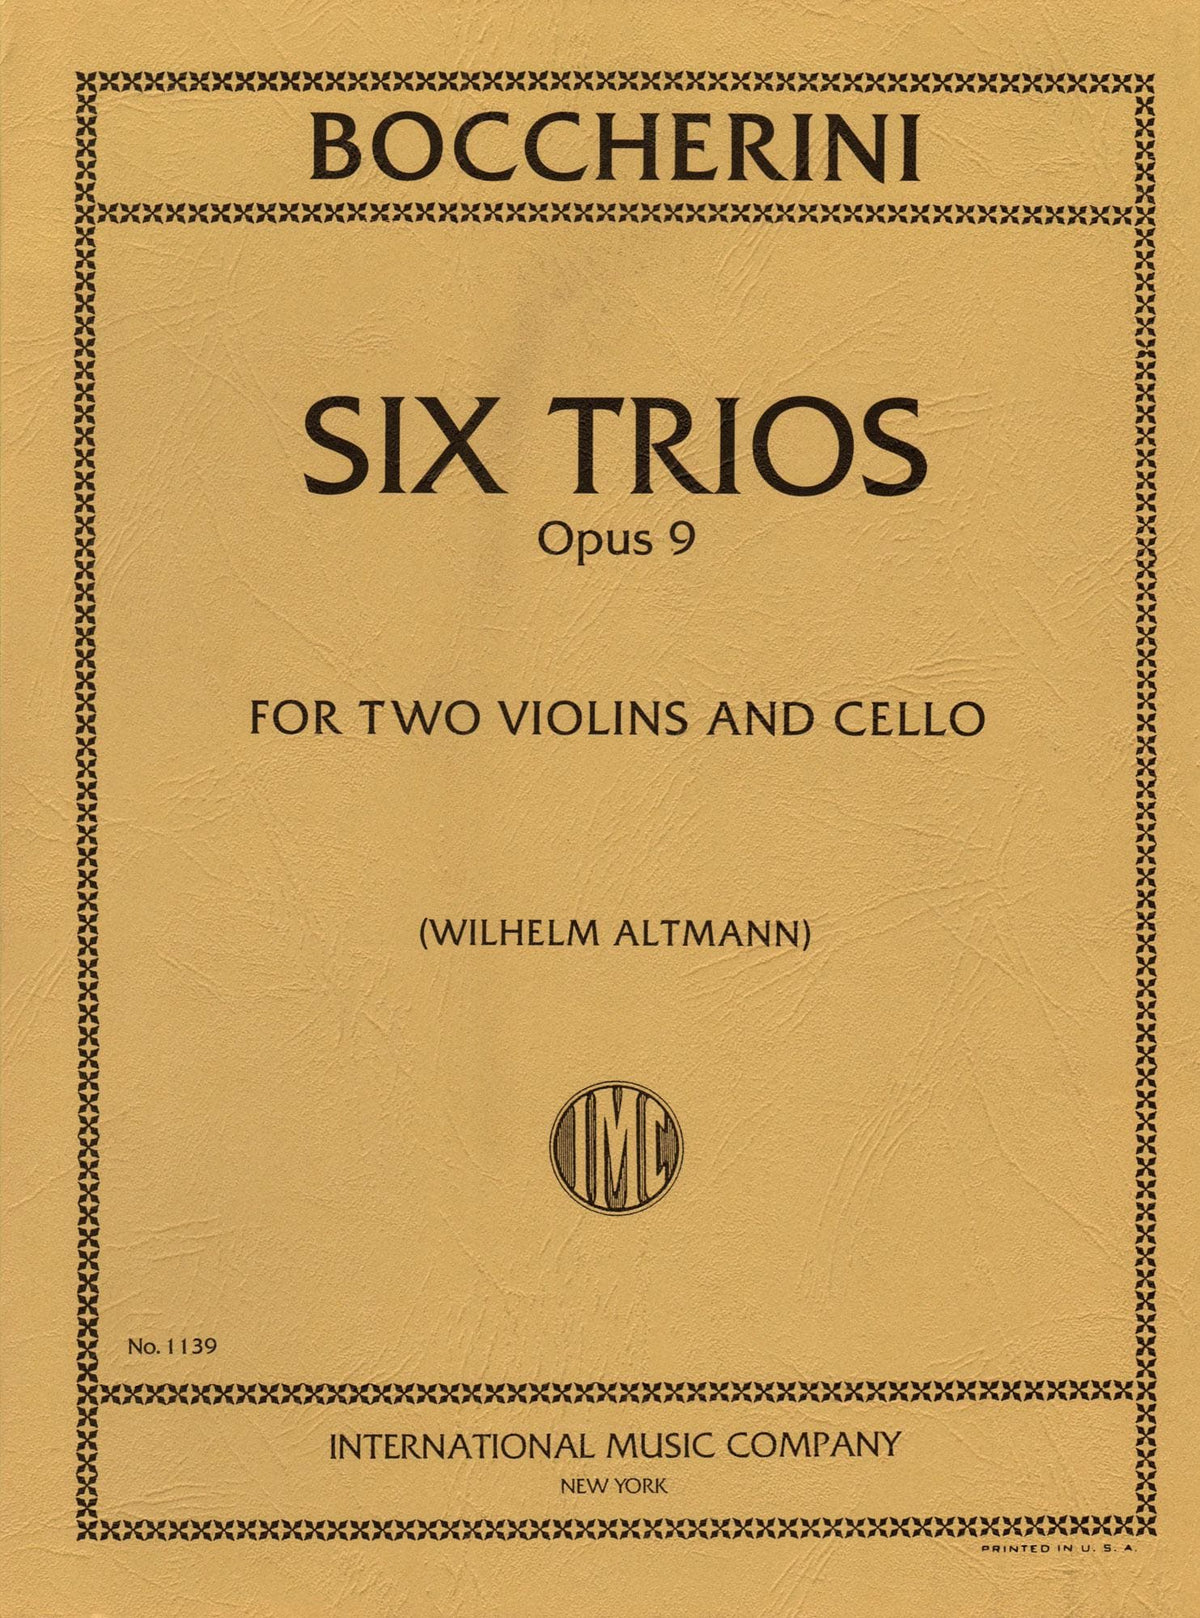 Boccherini, Luigi - 6 Trios Op 9 G 89-94 for Two Violins and Cello - Arranged by Altmann-Lyman - International Edition